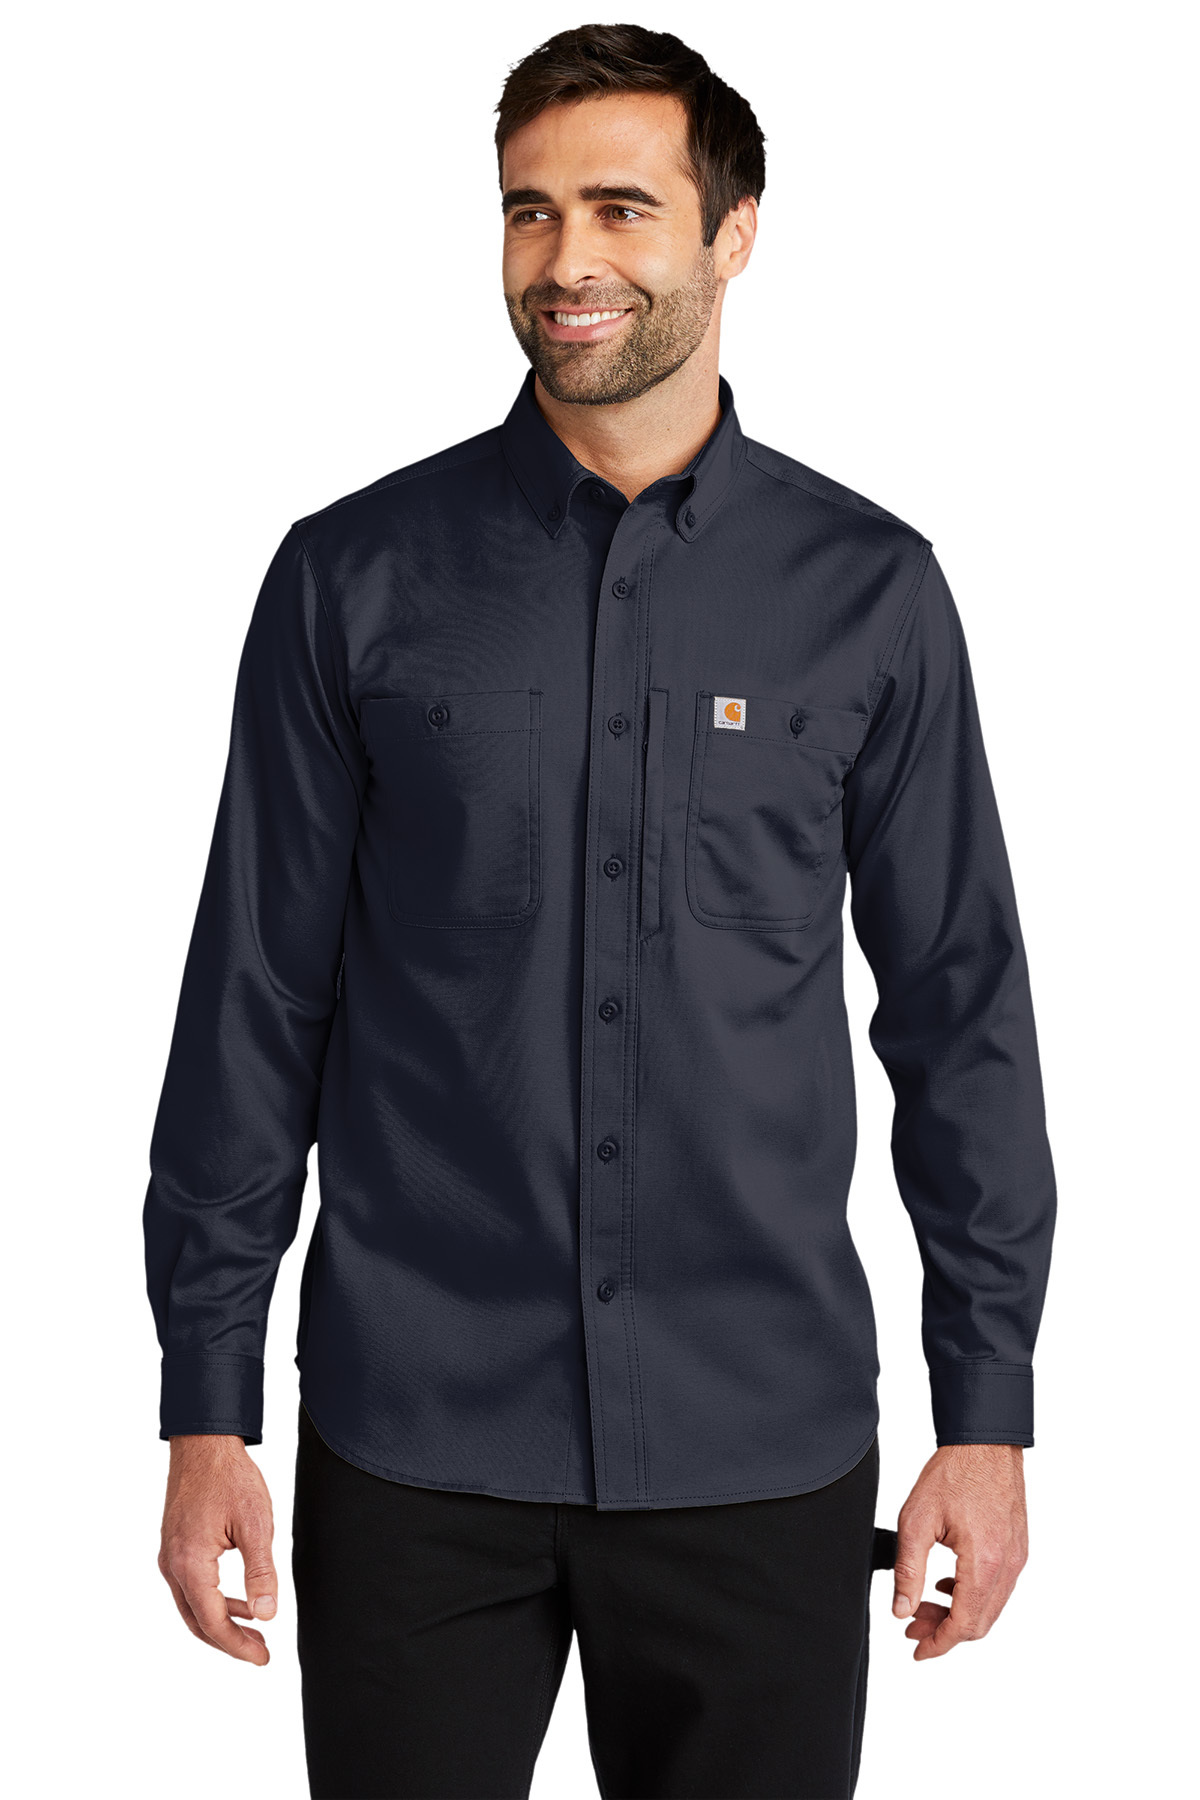 Product Long Sleeve Carhartt | Professional Rugged Series SanMar Shirt |